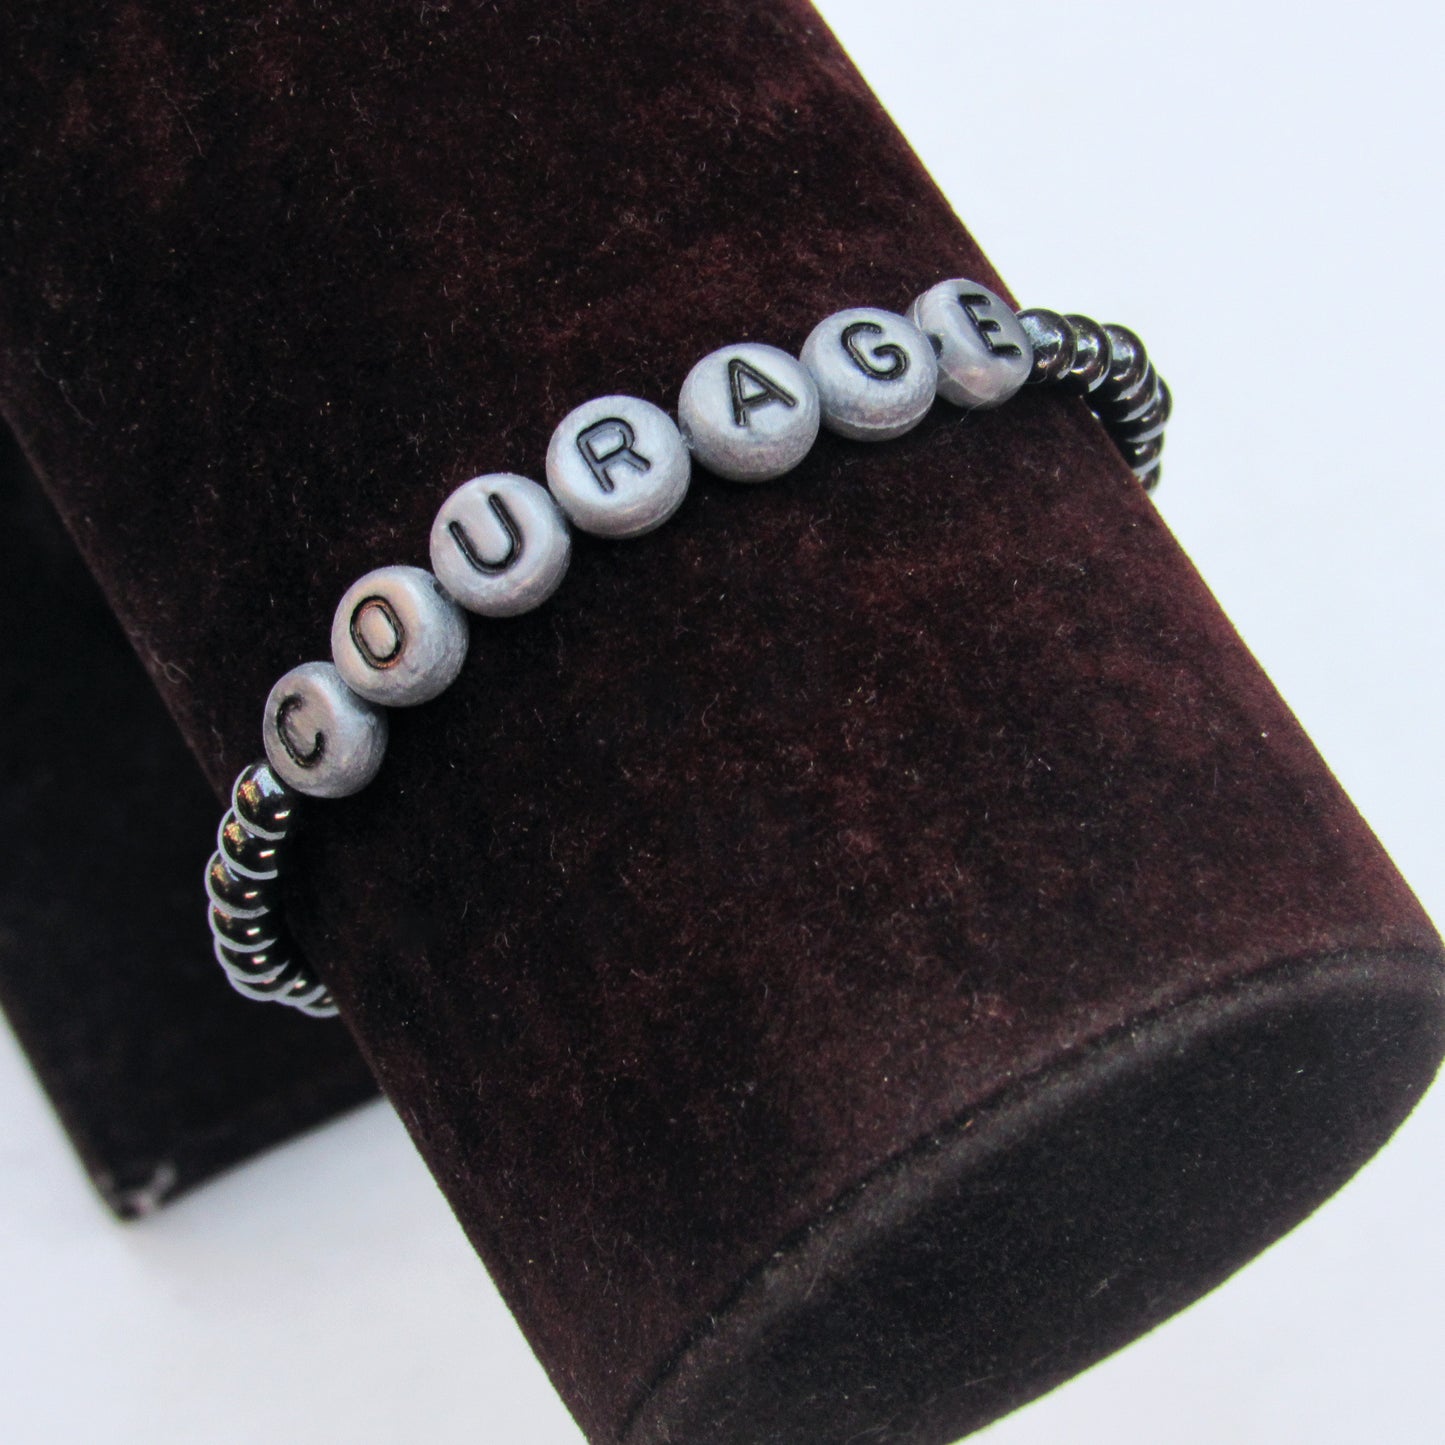 Hematite and Labradorite “Courage” Stretch Bracelet